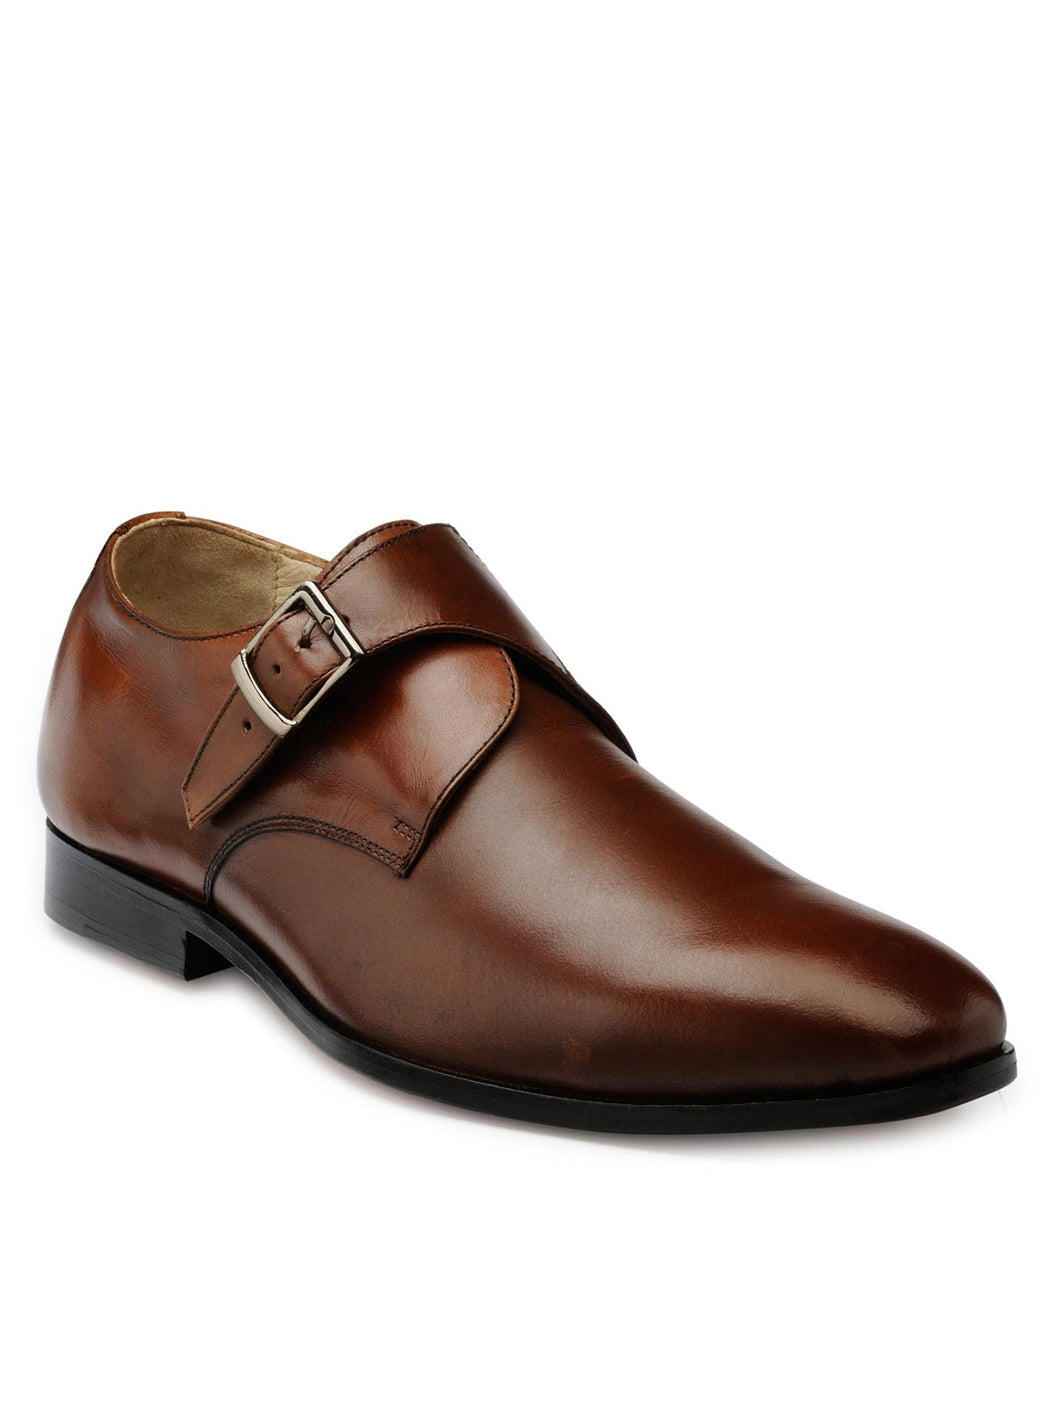 Teakwood Genuine Leather Monk Strap Shoes